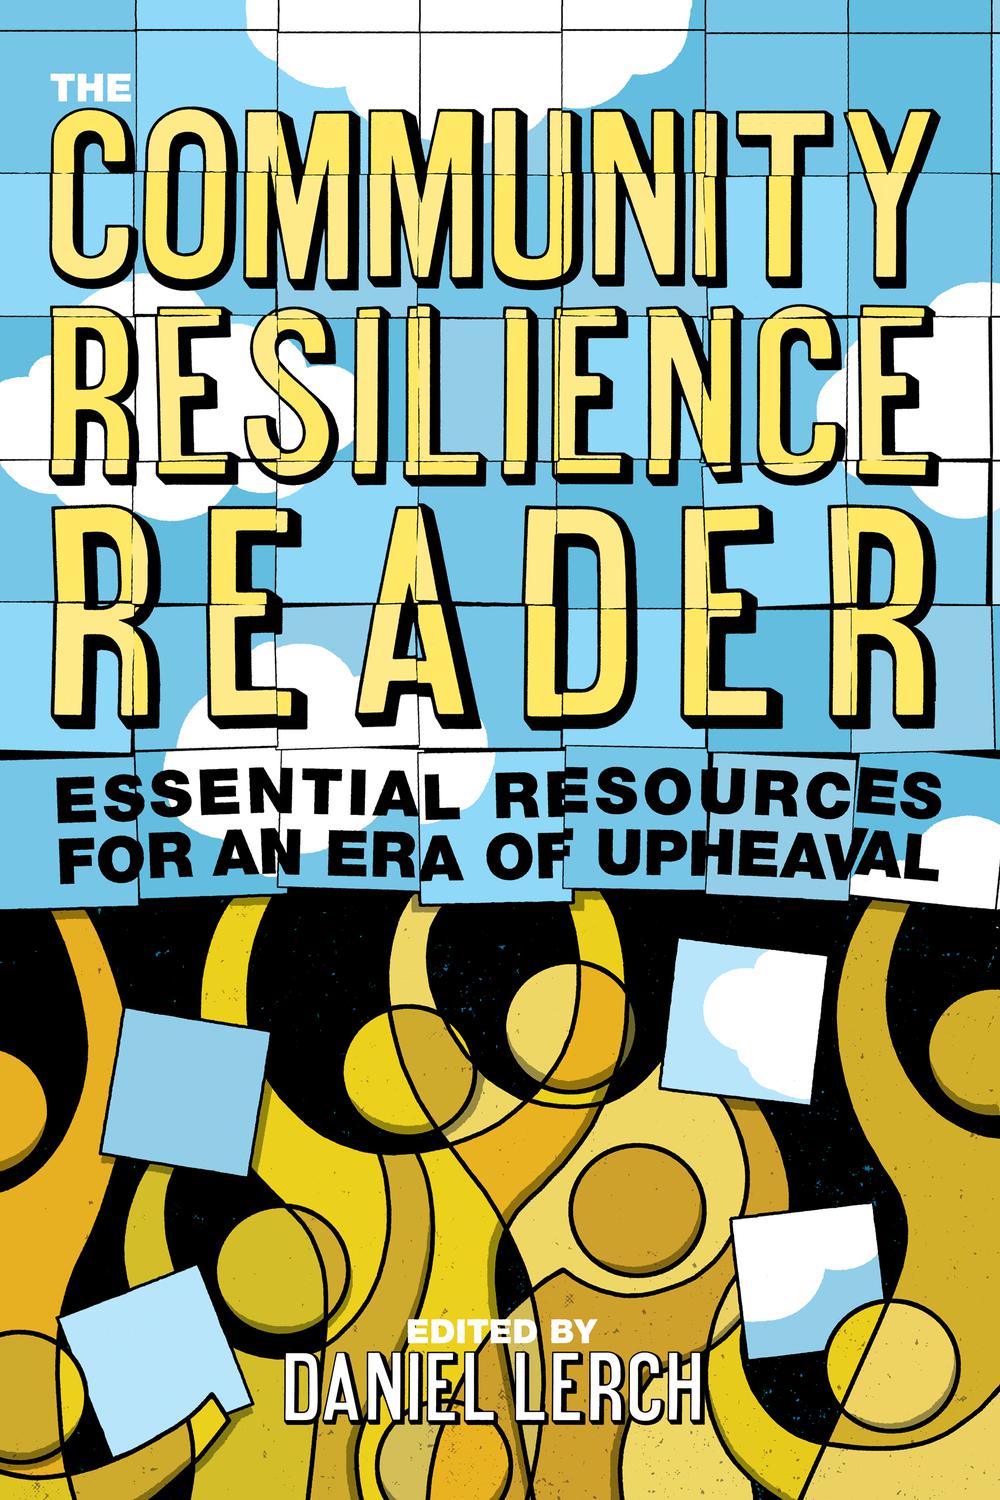 The Community Resilience Reader - Daniel Lerch, Daniel Lerch